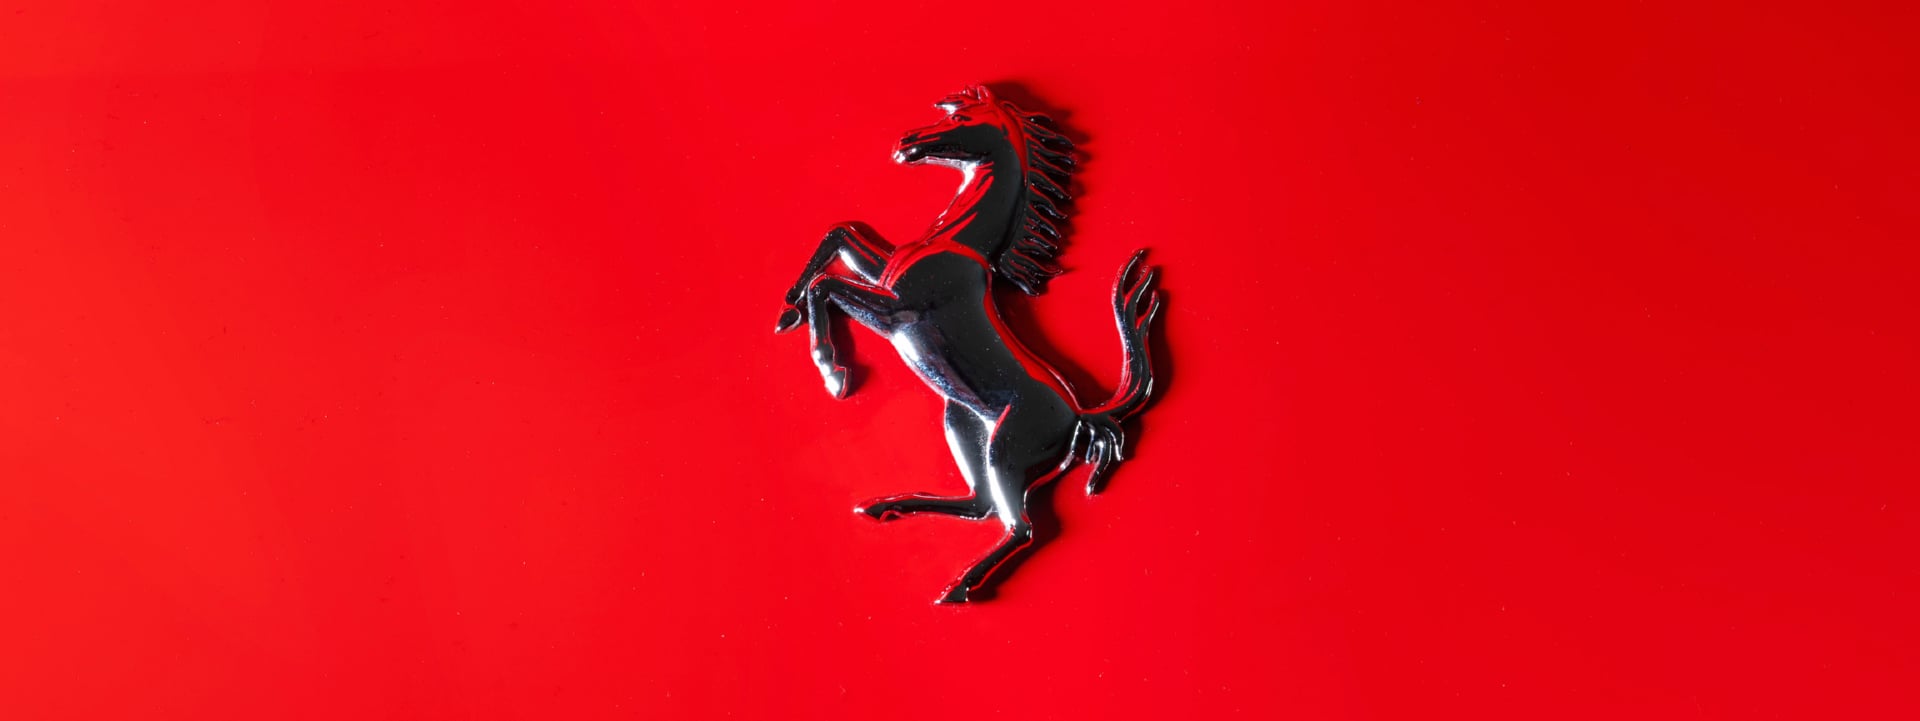 Ferrari logo at 1600 x 1200 size wallpapers HD quality